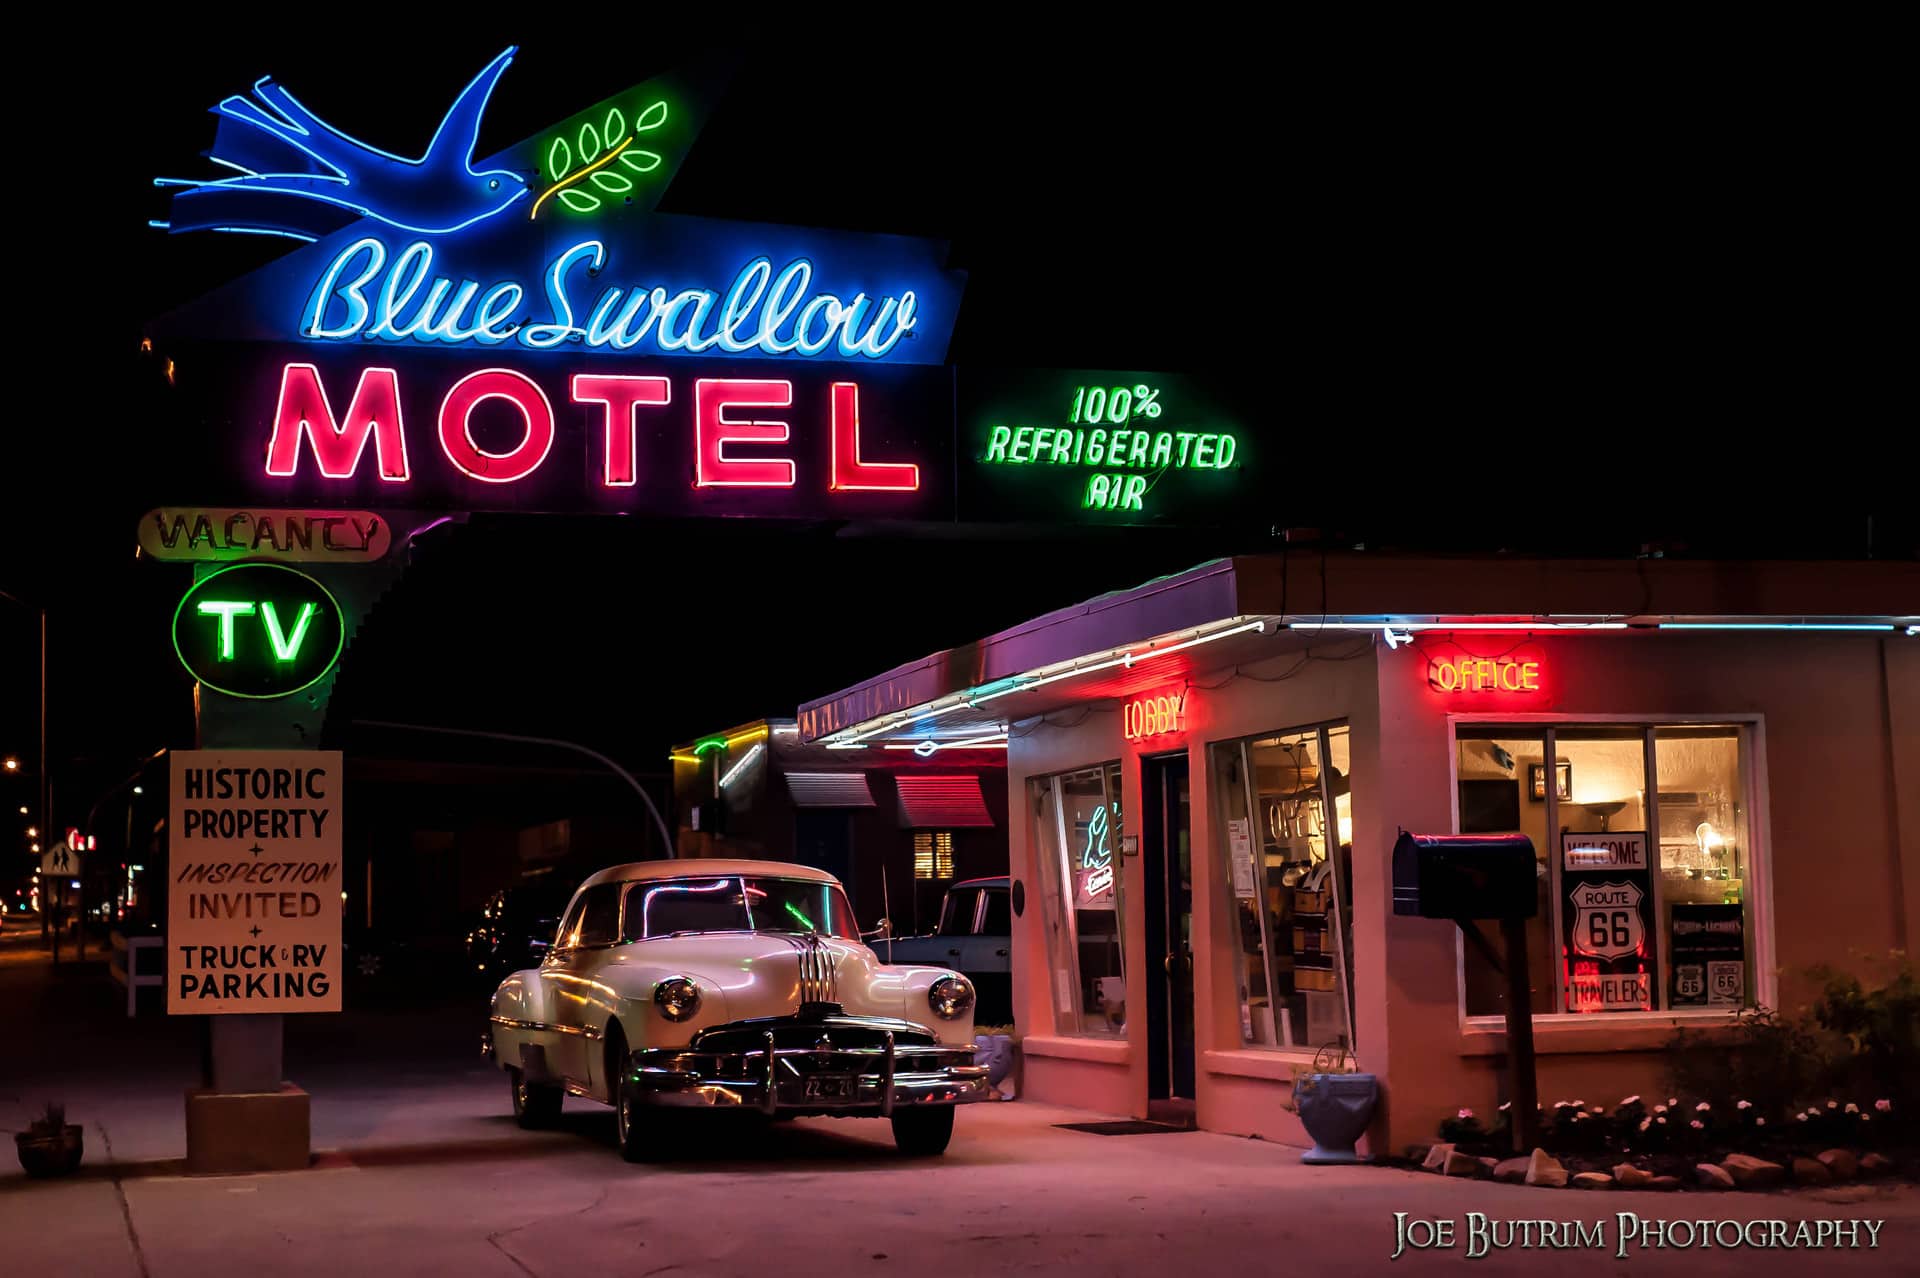 Blue Swallow Motel Night Route 66 Joe Butrim Photograph